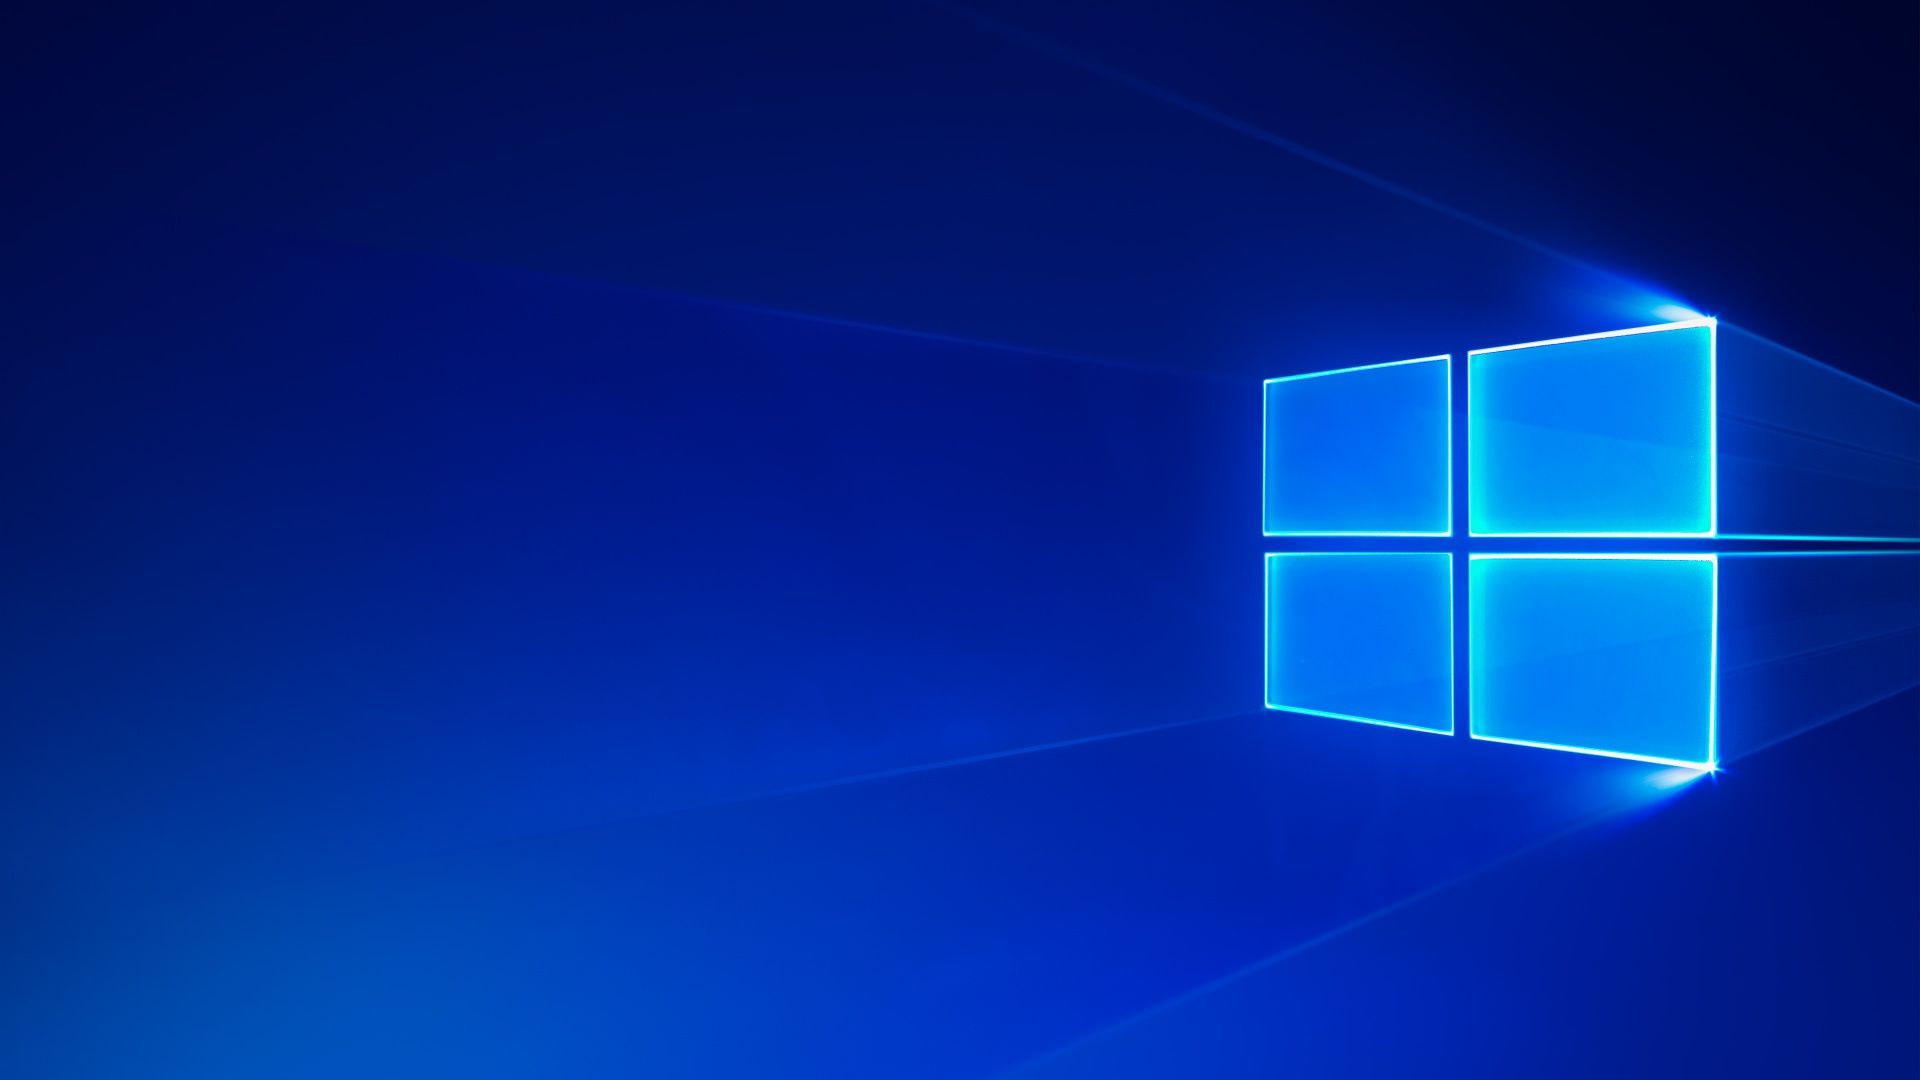  Windows 10 1920x1080 Hintergrundbild 1920x1080. Windows 10 Wallpaper 4K, Blue aesthetic, Microsoft Windows